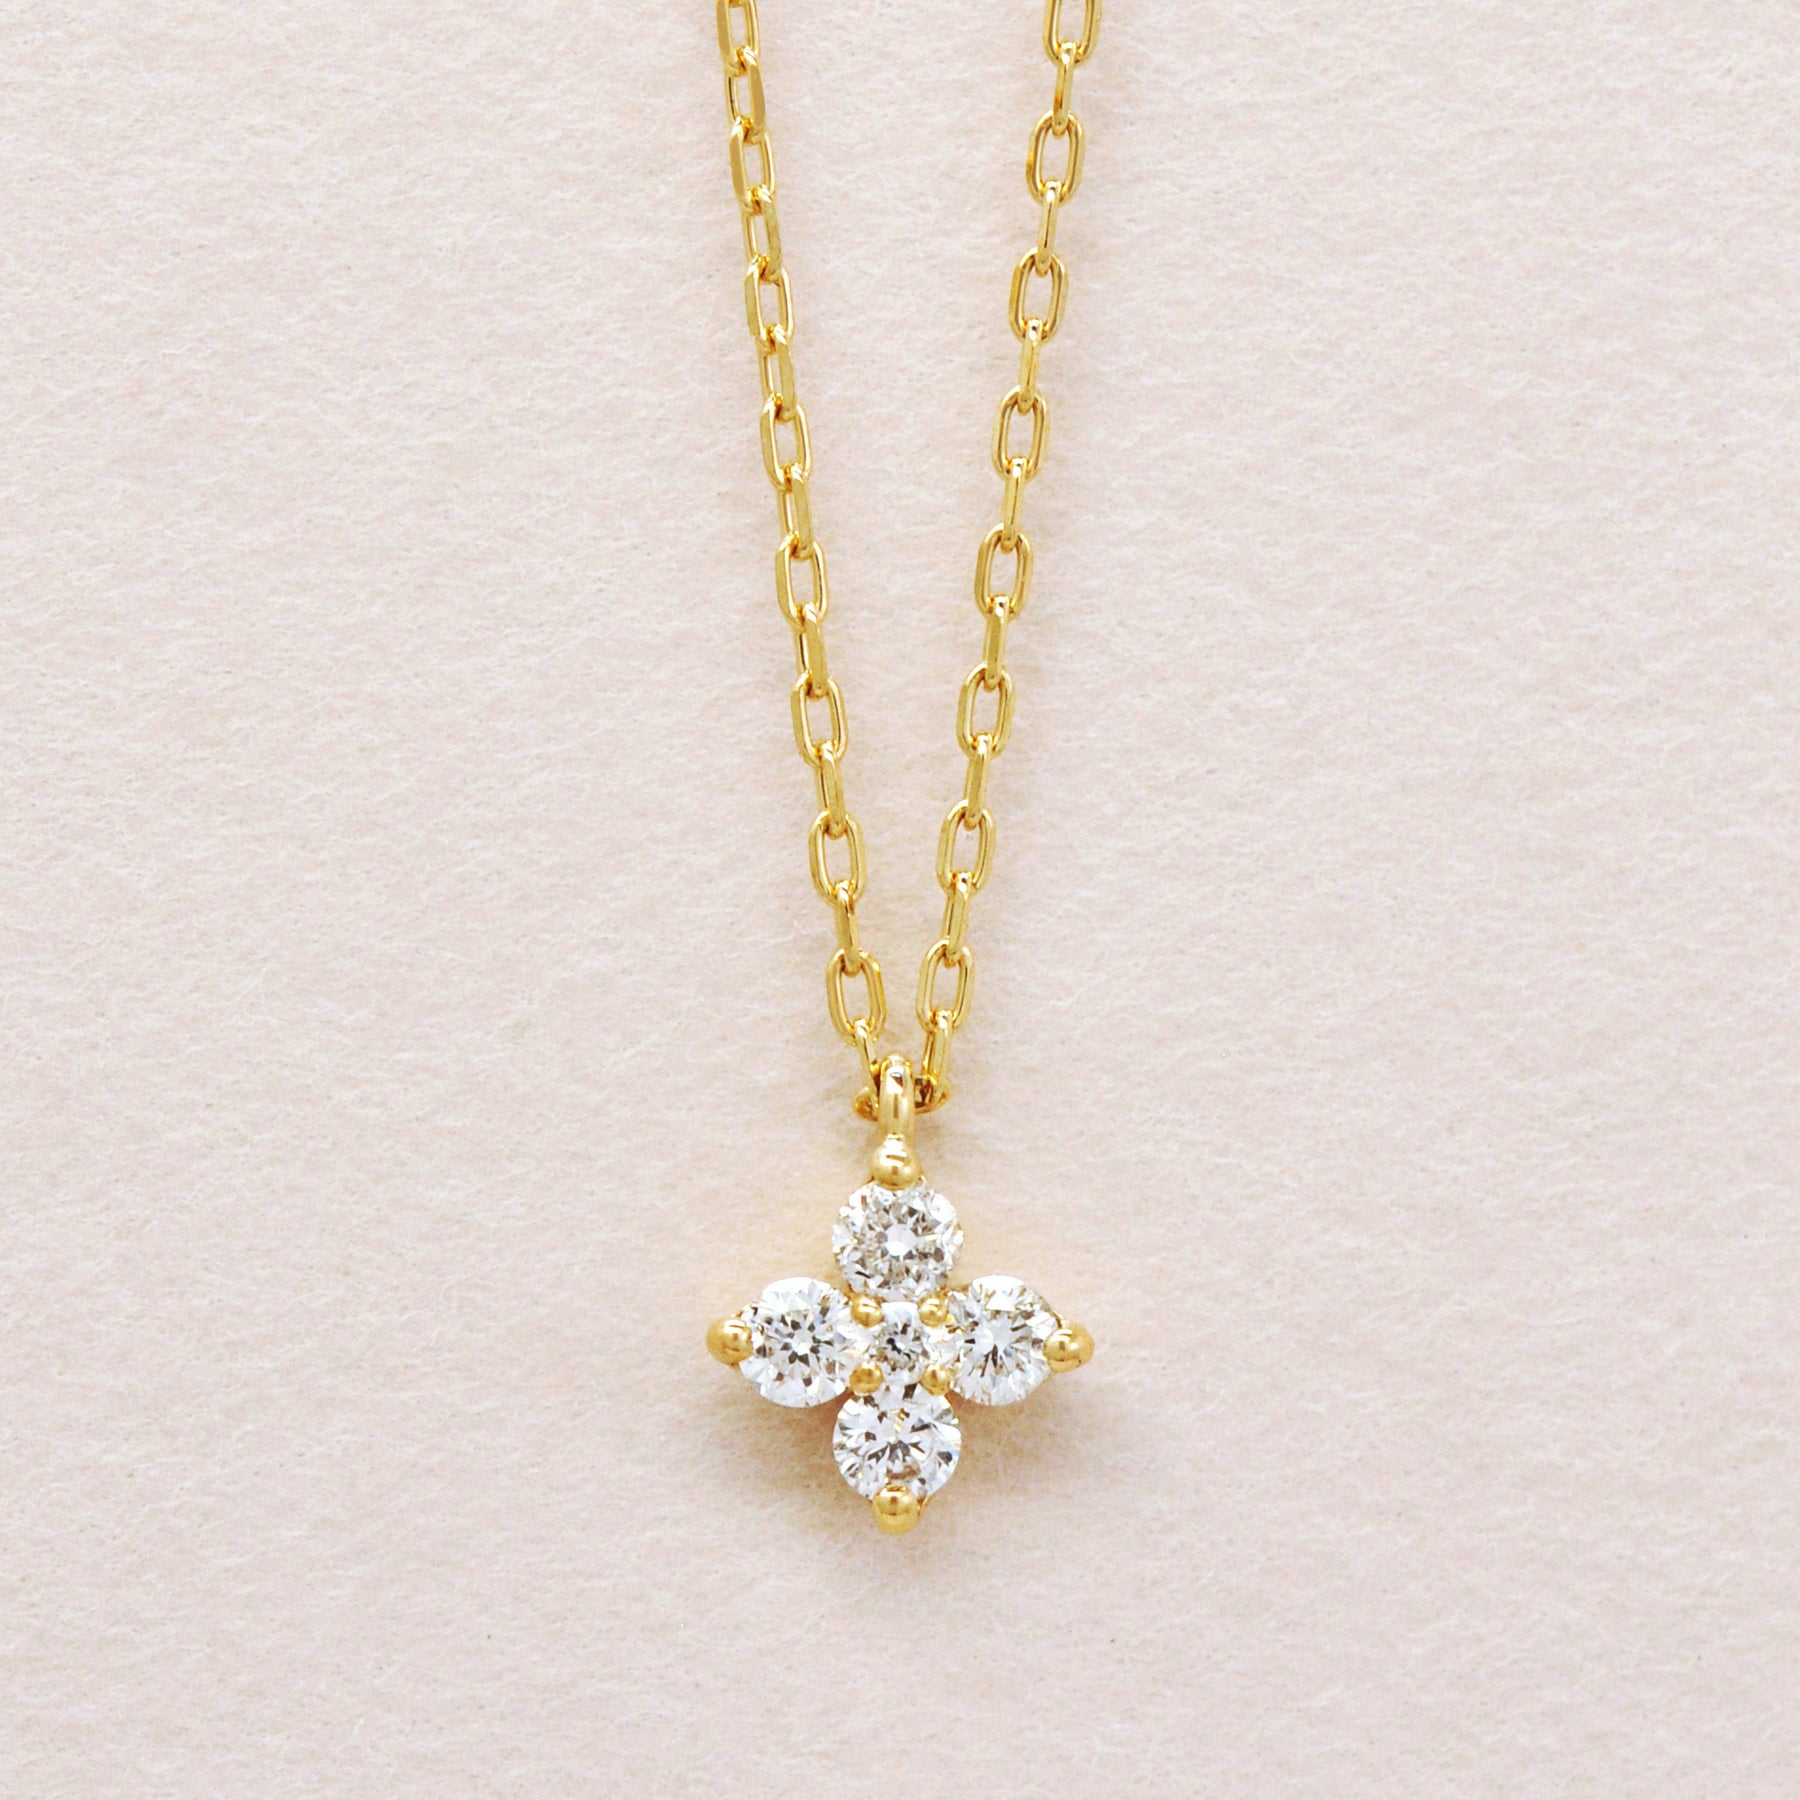 10K Yellow Gold Diamond Mini Flower Necklace - Product Image